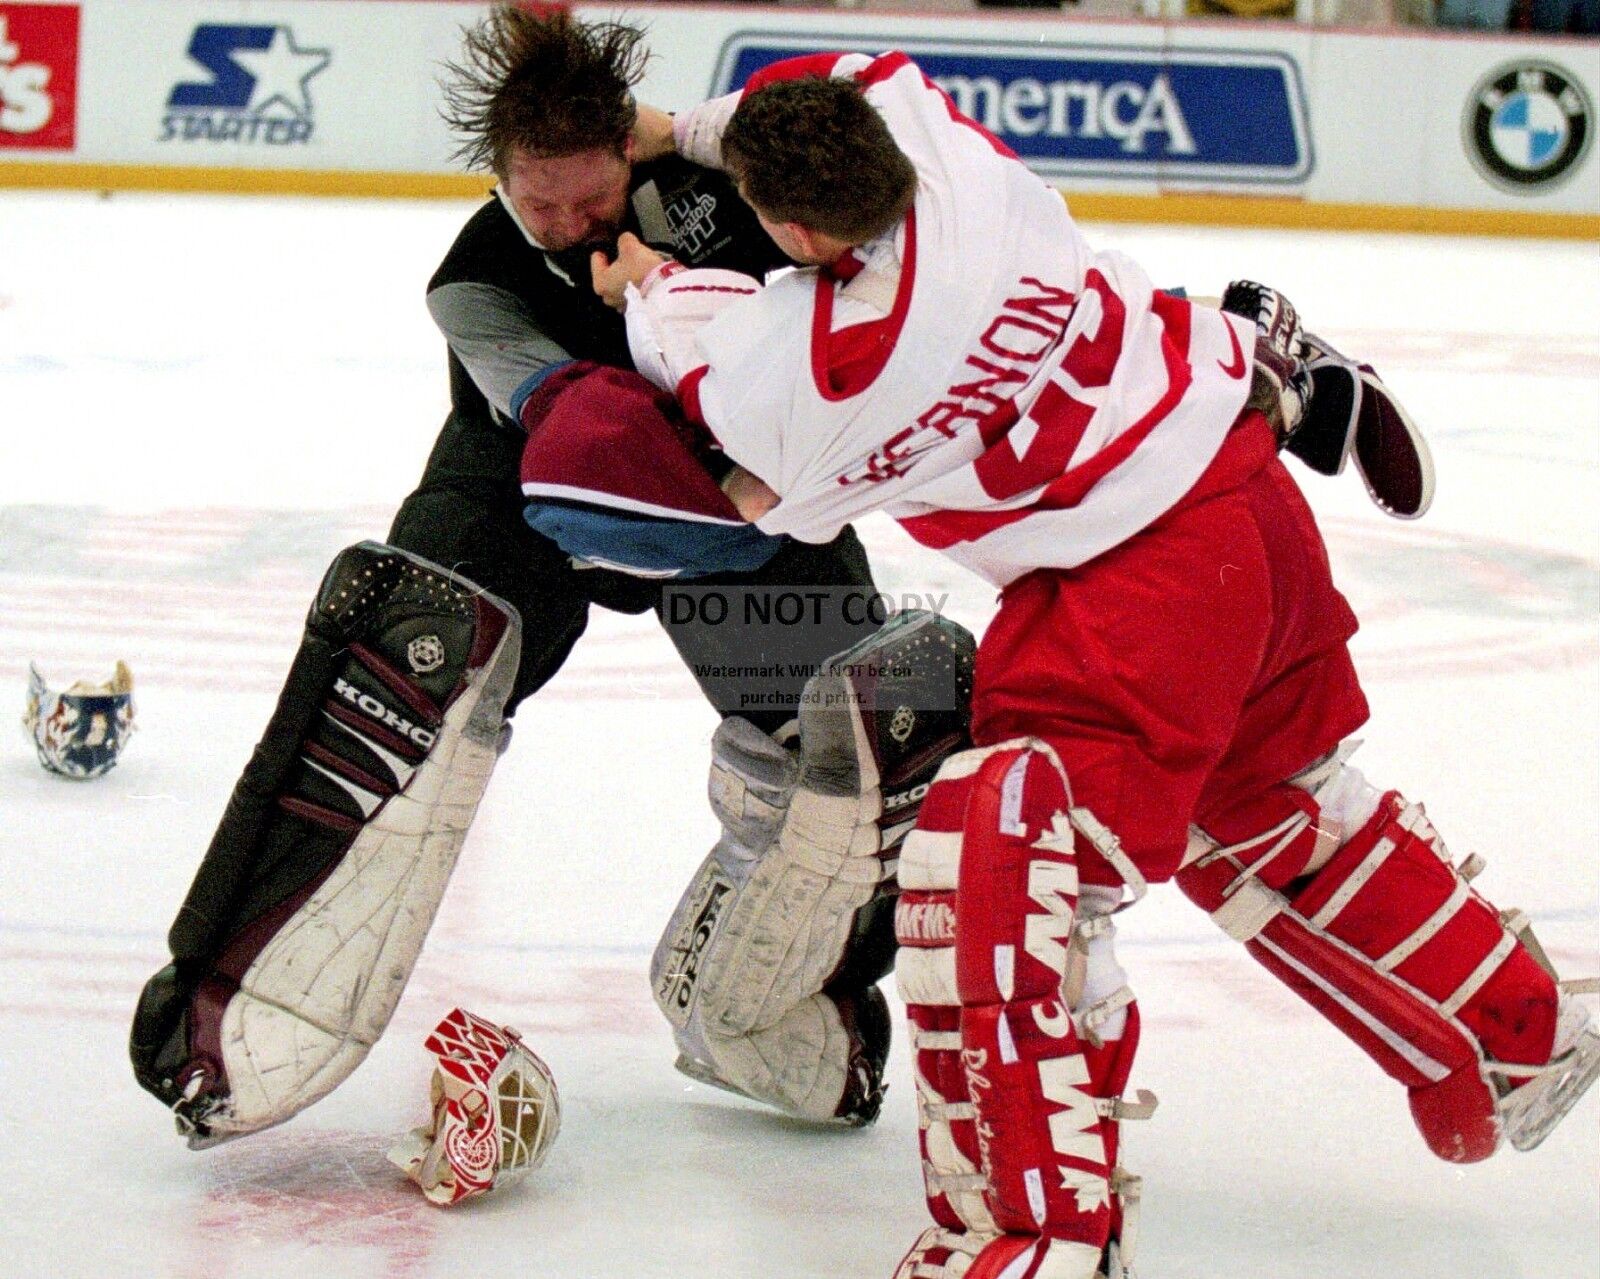 PATRICK ROY MIKE VERNON HOCKEY FIGHT CANADIENS FLAMES - 8X10 NHL PHOTO (FB-441)